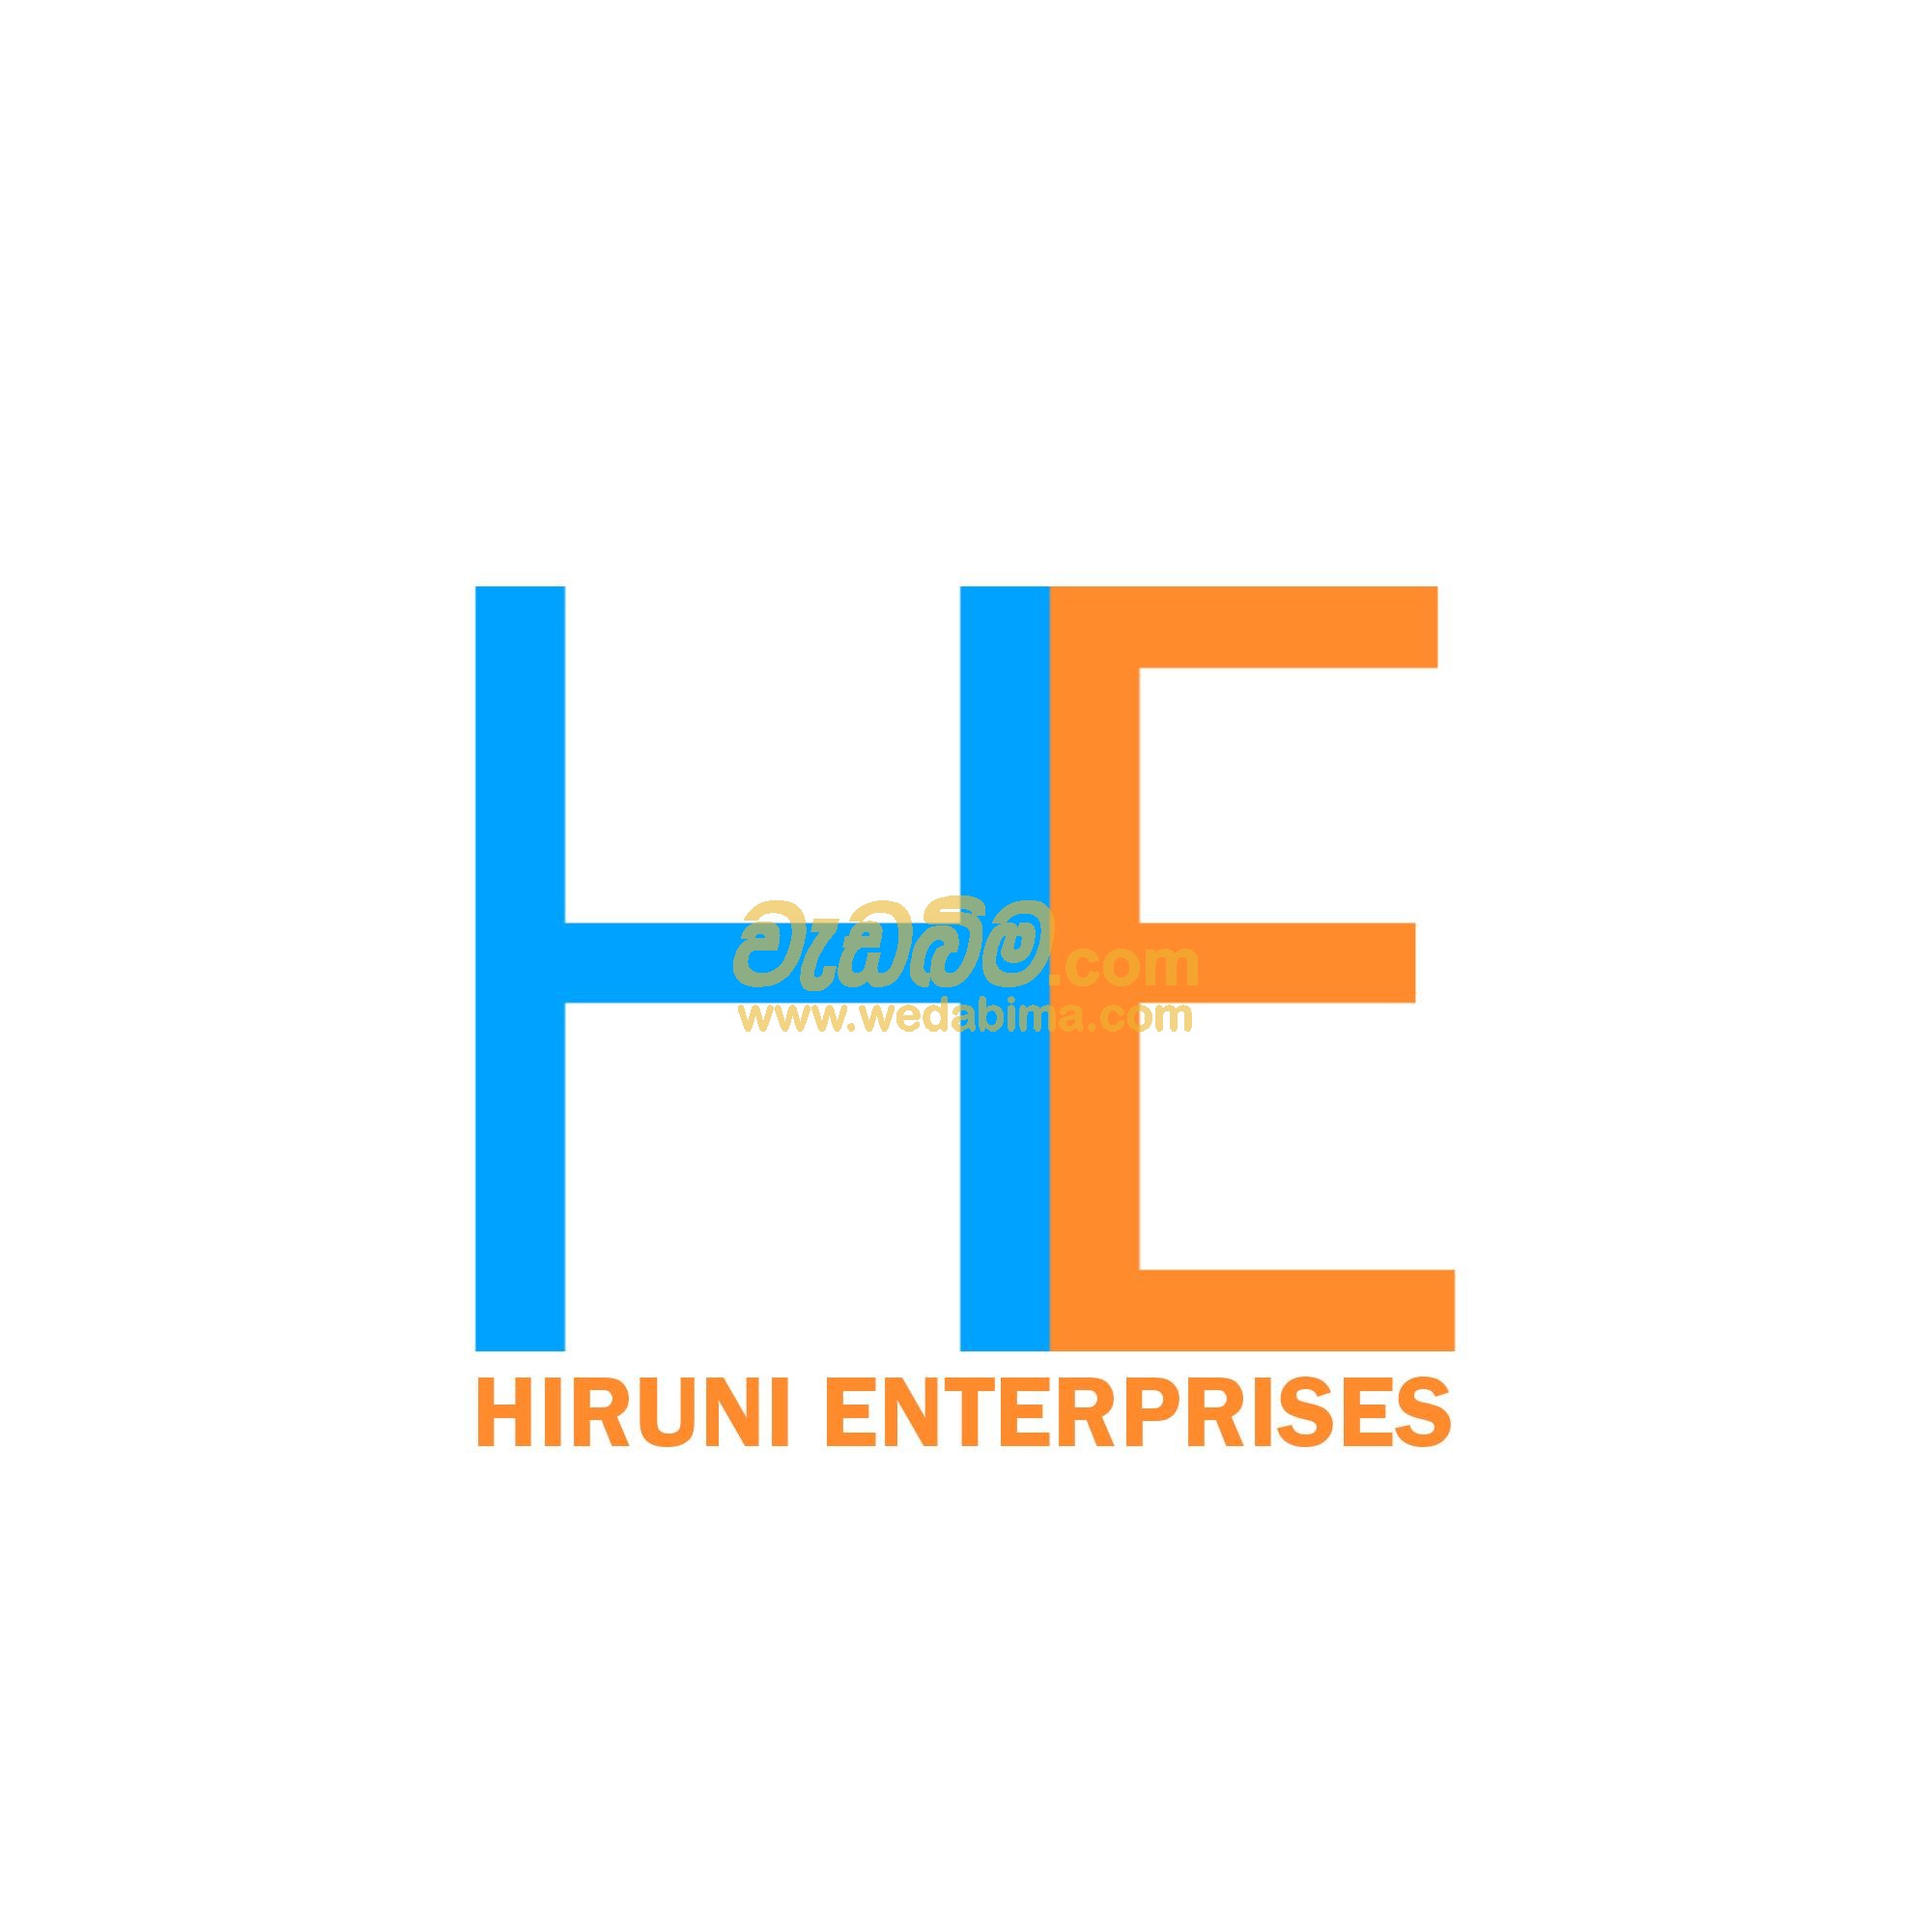 Hiruni Enterprises